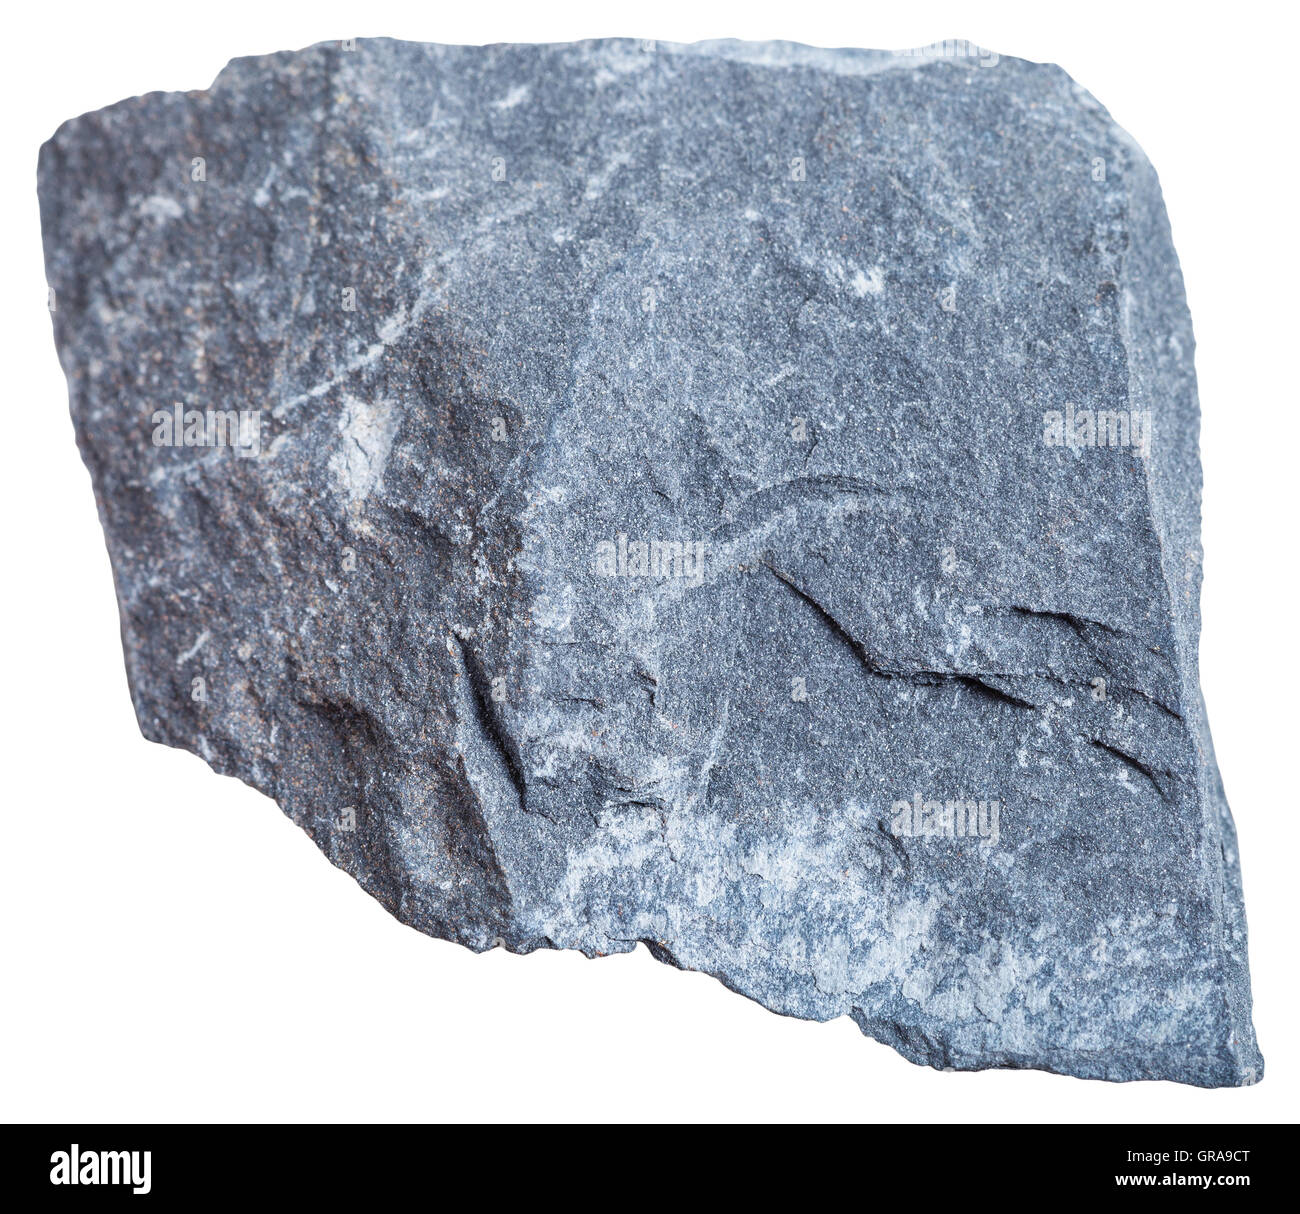 macro shooting of sedimentary rock specimens - Argillite (mudstone) stone isolated on white background Stock Photo